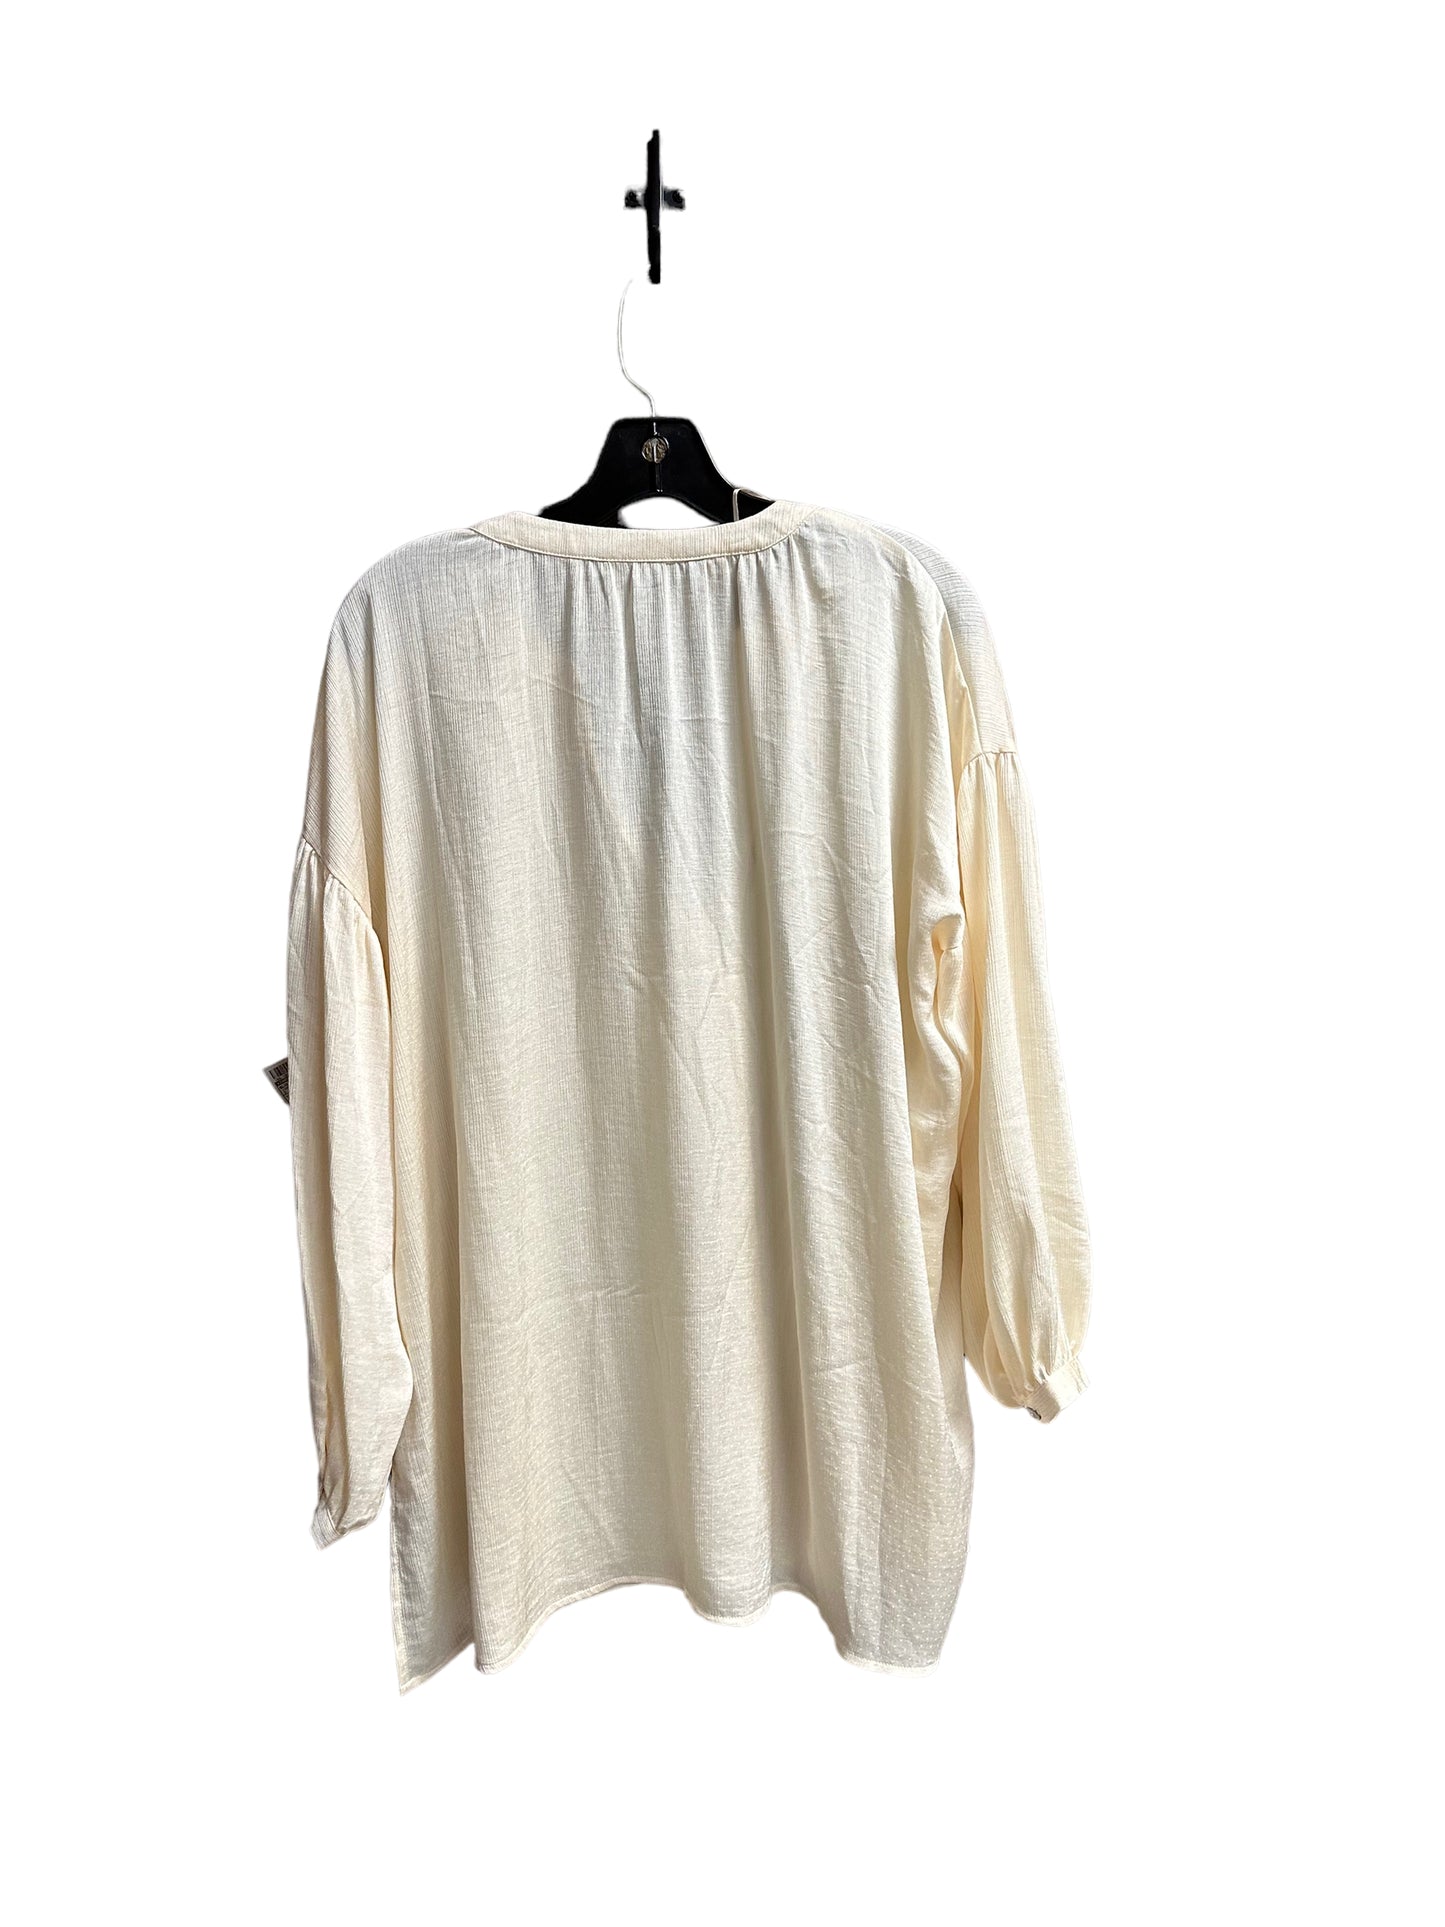 Blouse Long Sleeve By Zara  Size: S